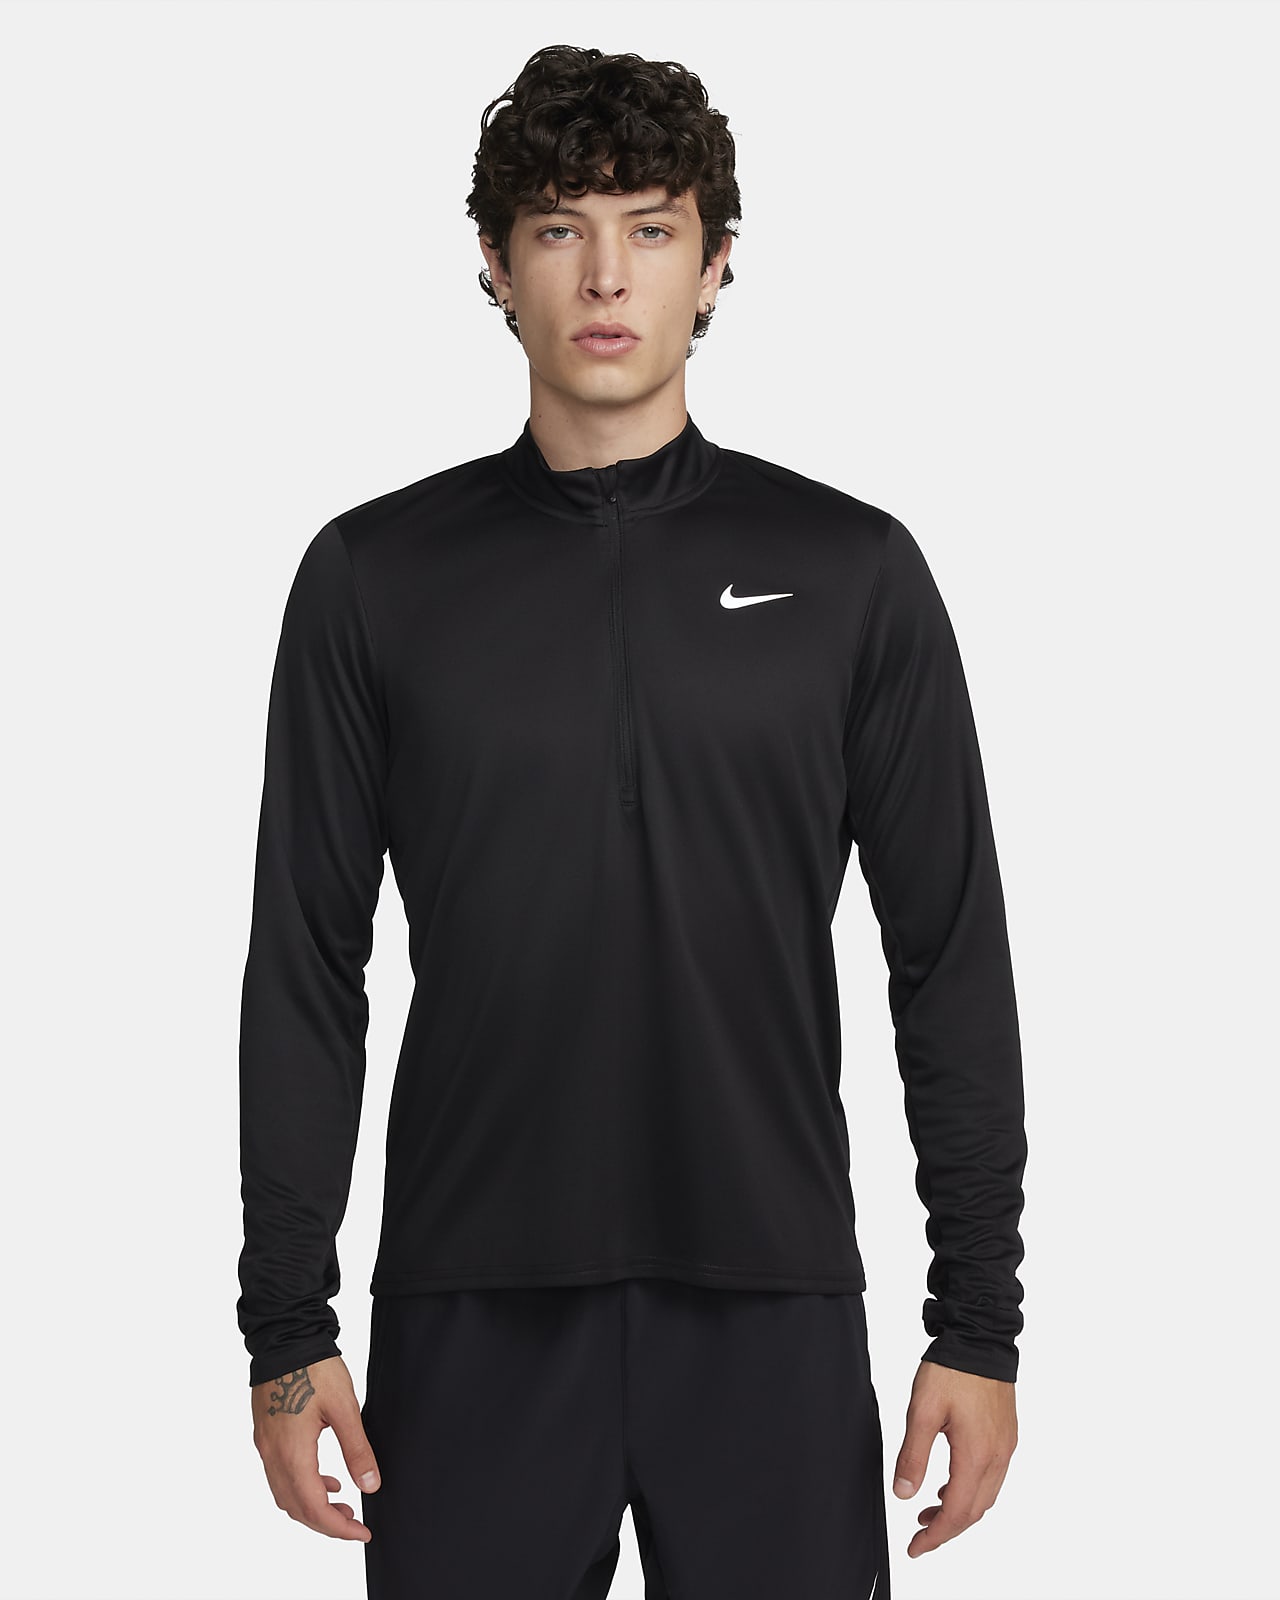 Nike Pacer Dri-FIT rövid cipzáras férfi futófelső